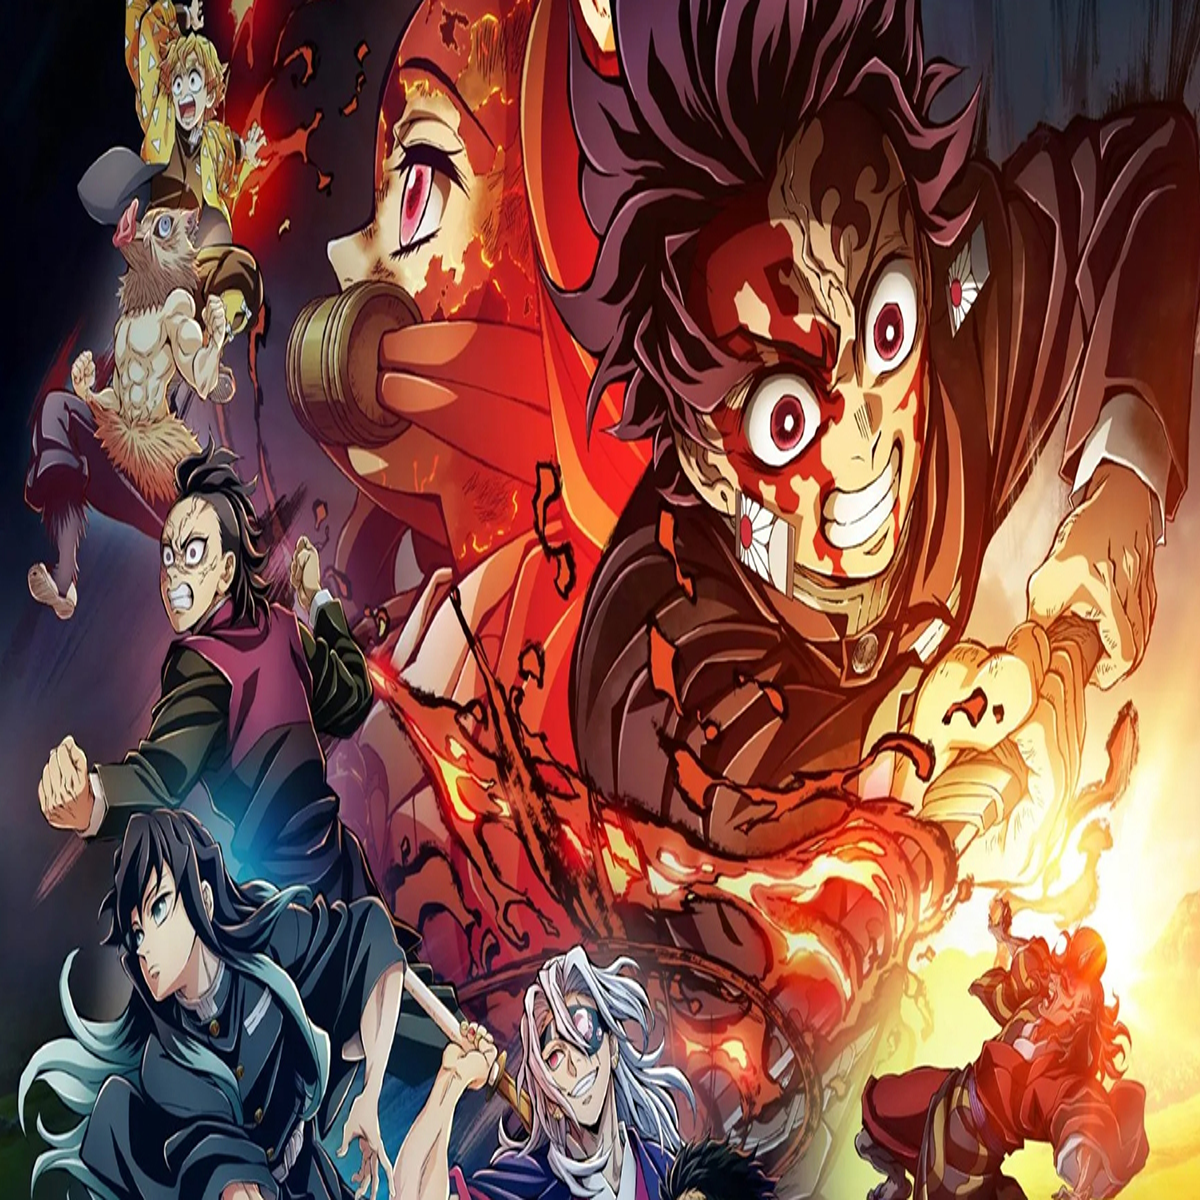 Swordsmith Village Arc] Episode 2 updated. - NEWS  Demon Slayer: Kimetsu  No Yaiba Swordsmith Village Arc Anime Official USA Website